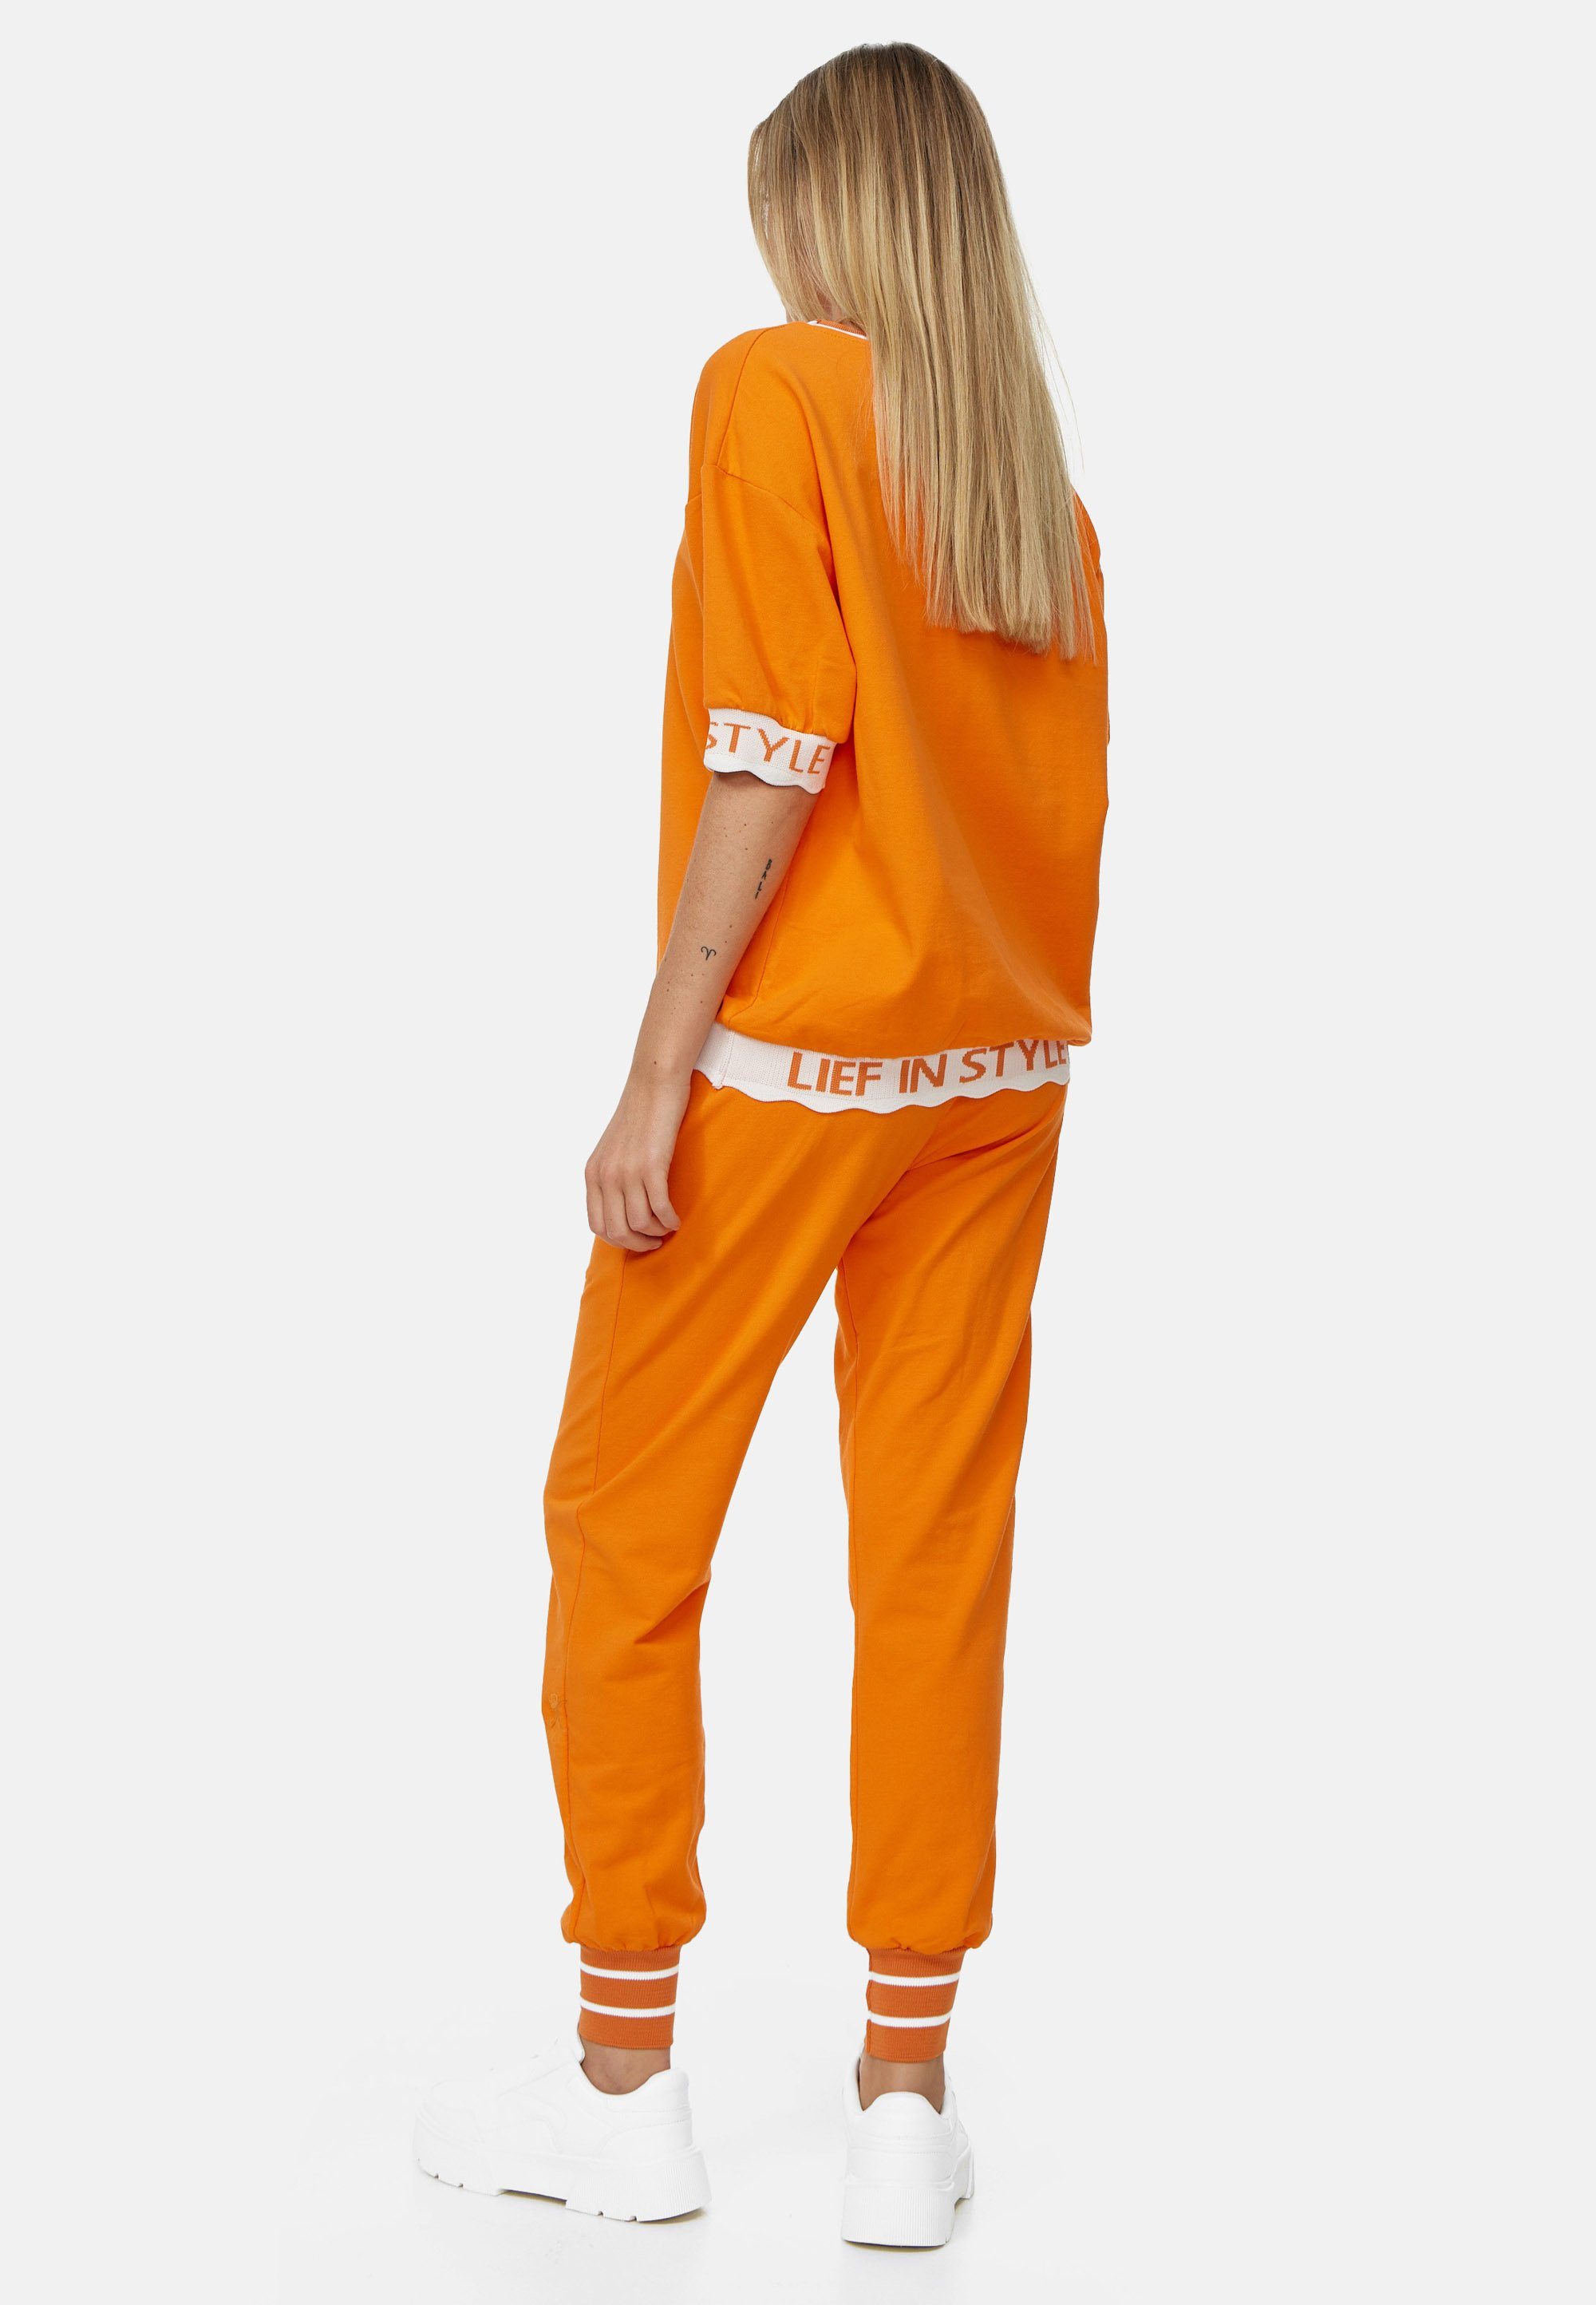 Decay T-Shirt mit orange Schriftzug stylishem